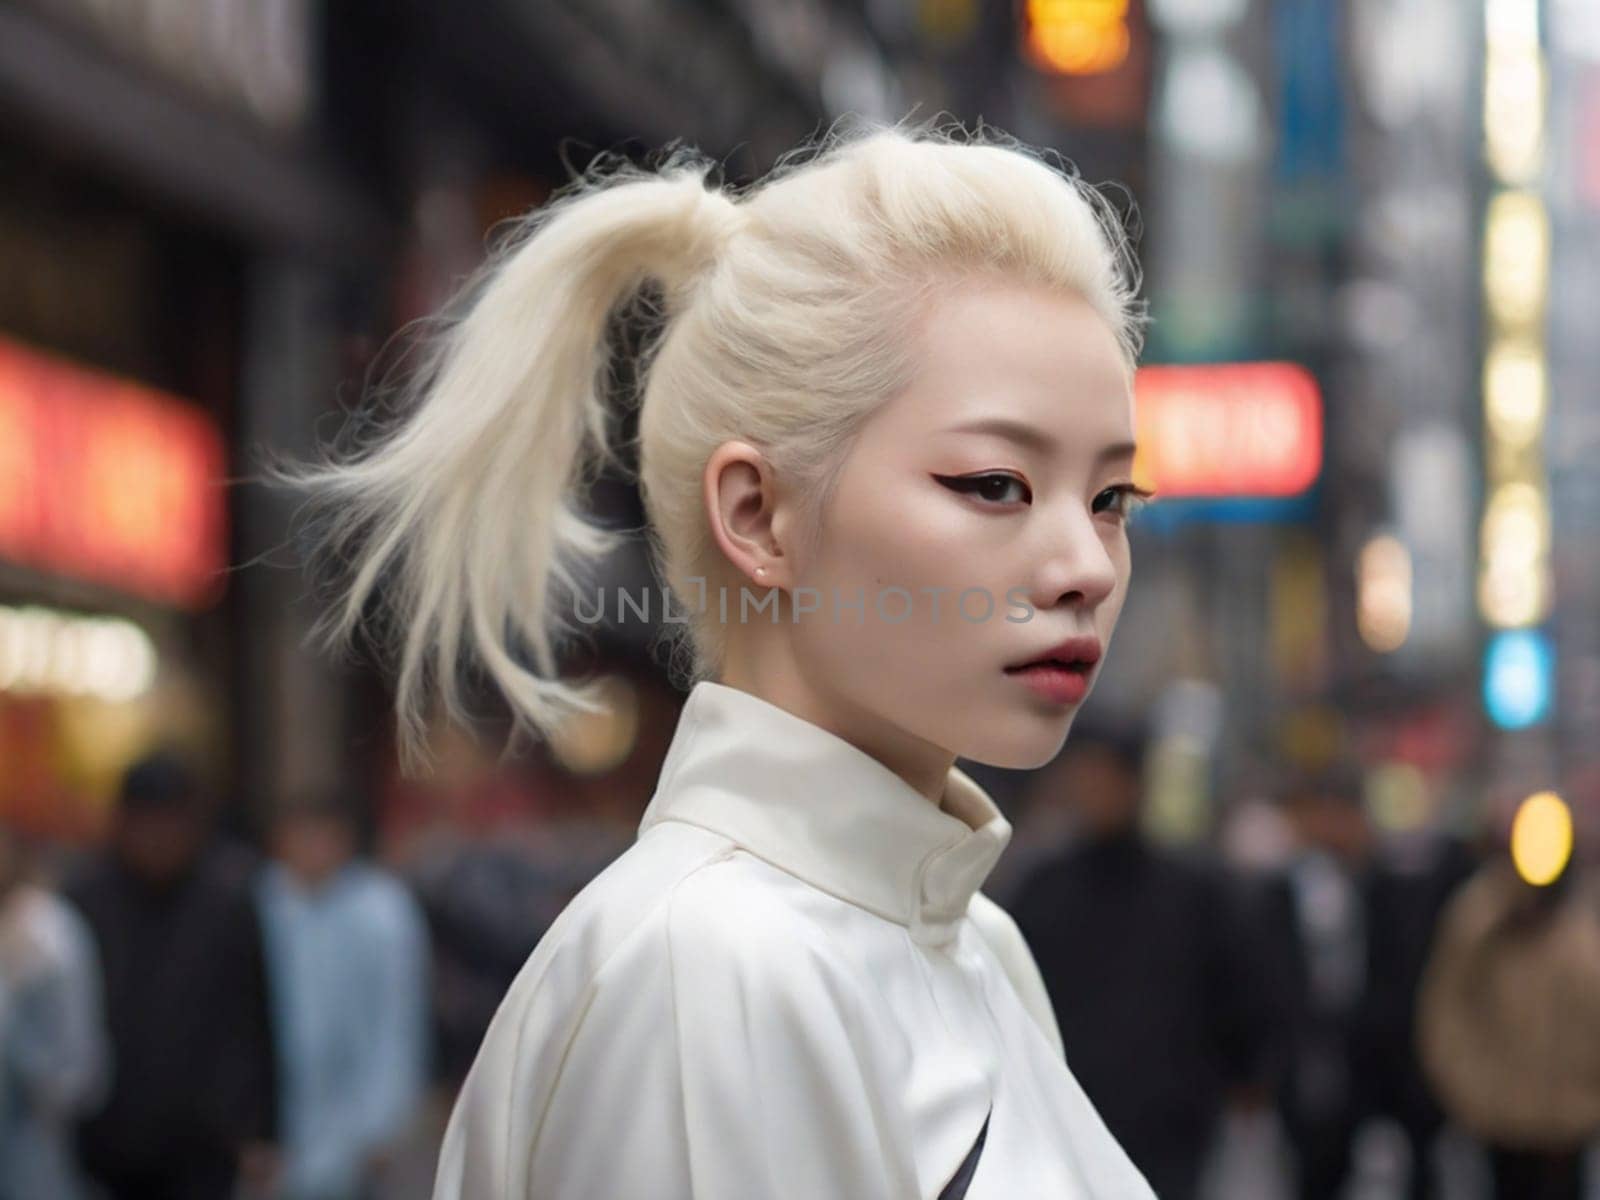 an albino girl of Asian appearance walks along the noisy streets of a noisy metropolis by Ekaterina34